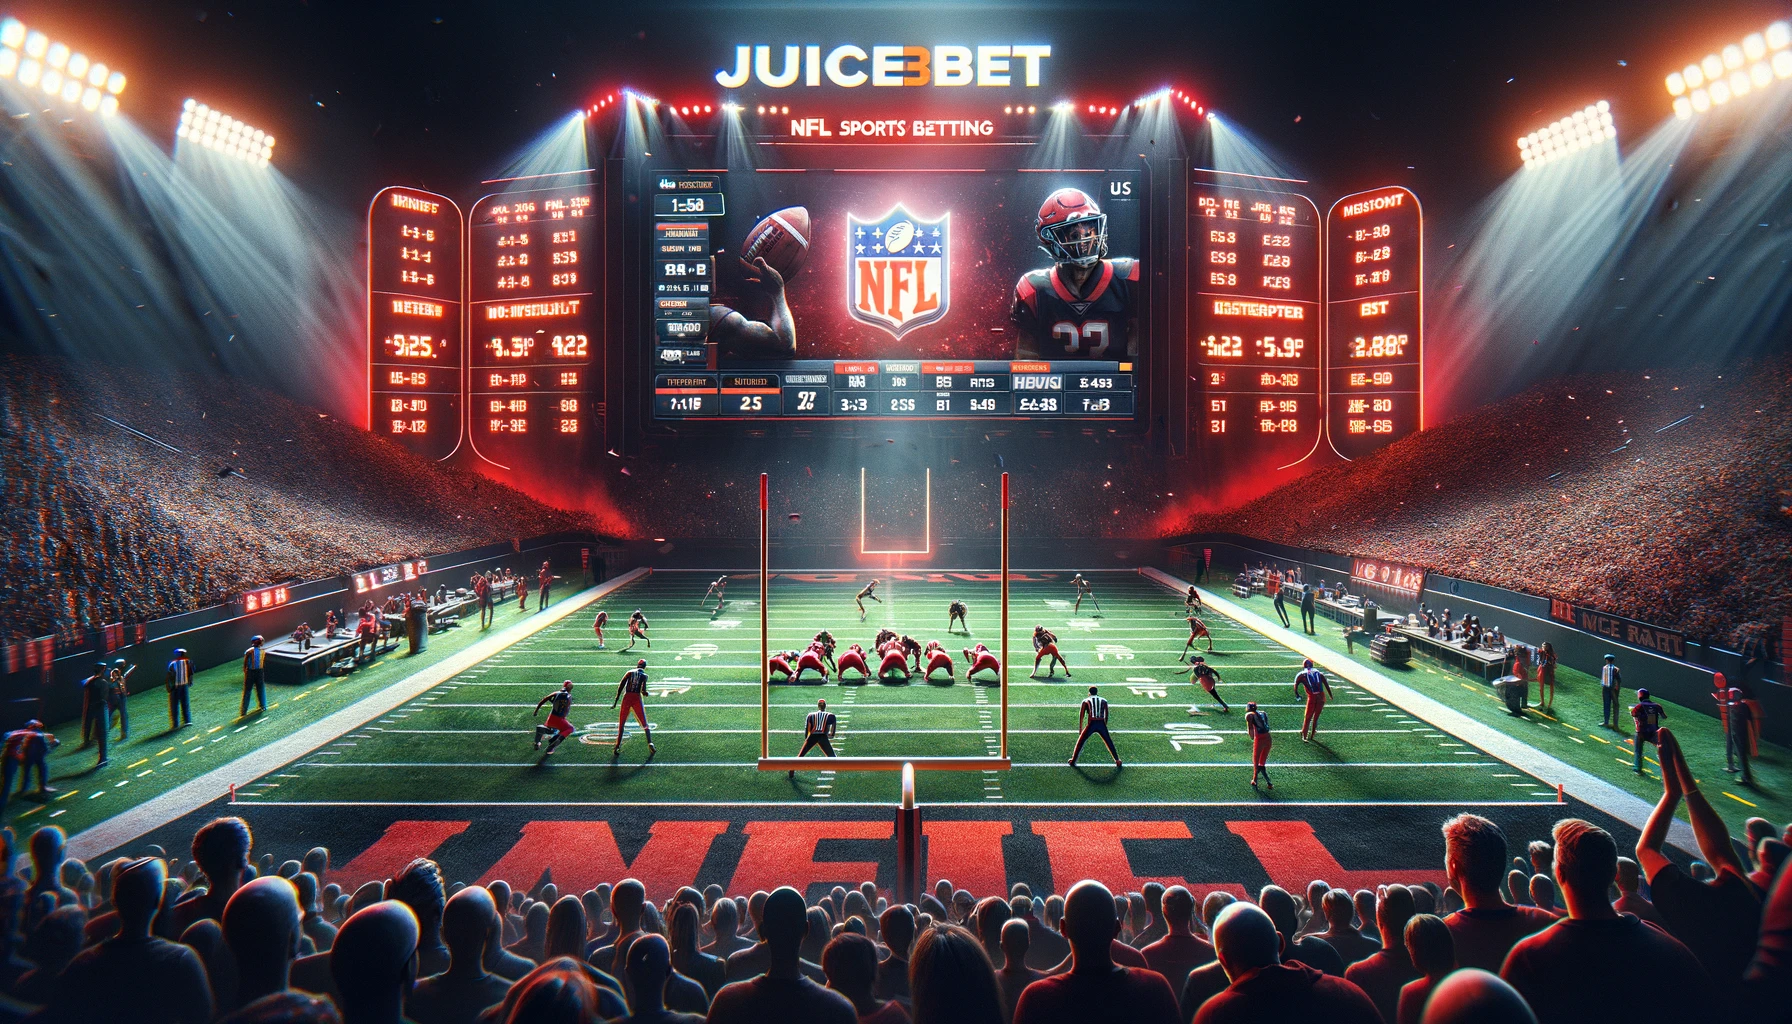 Juicebet NFL odds